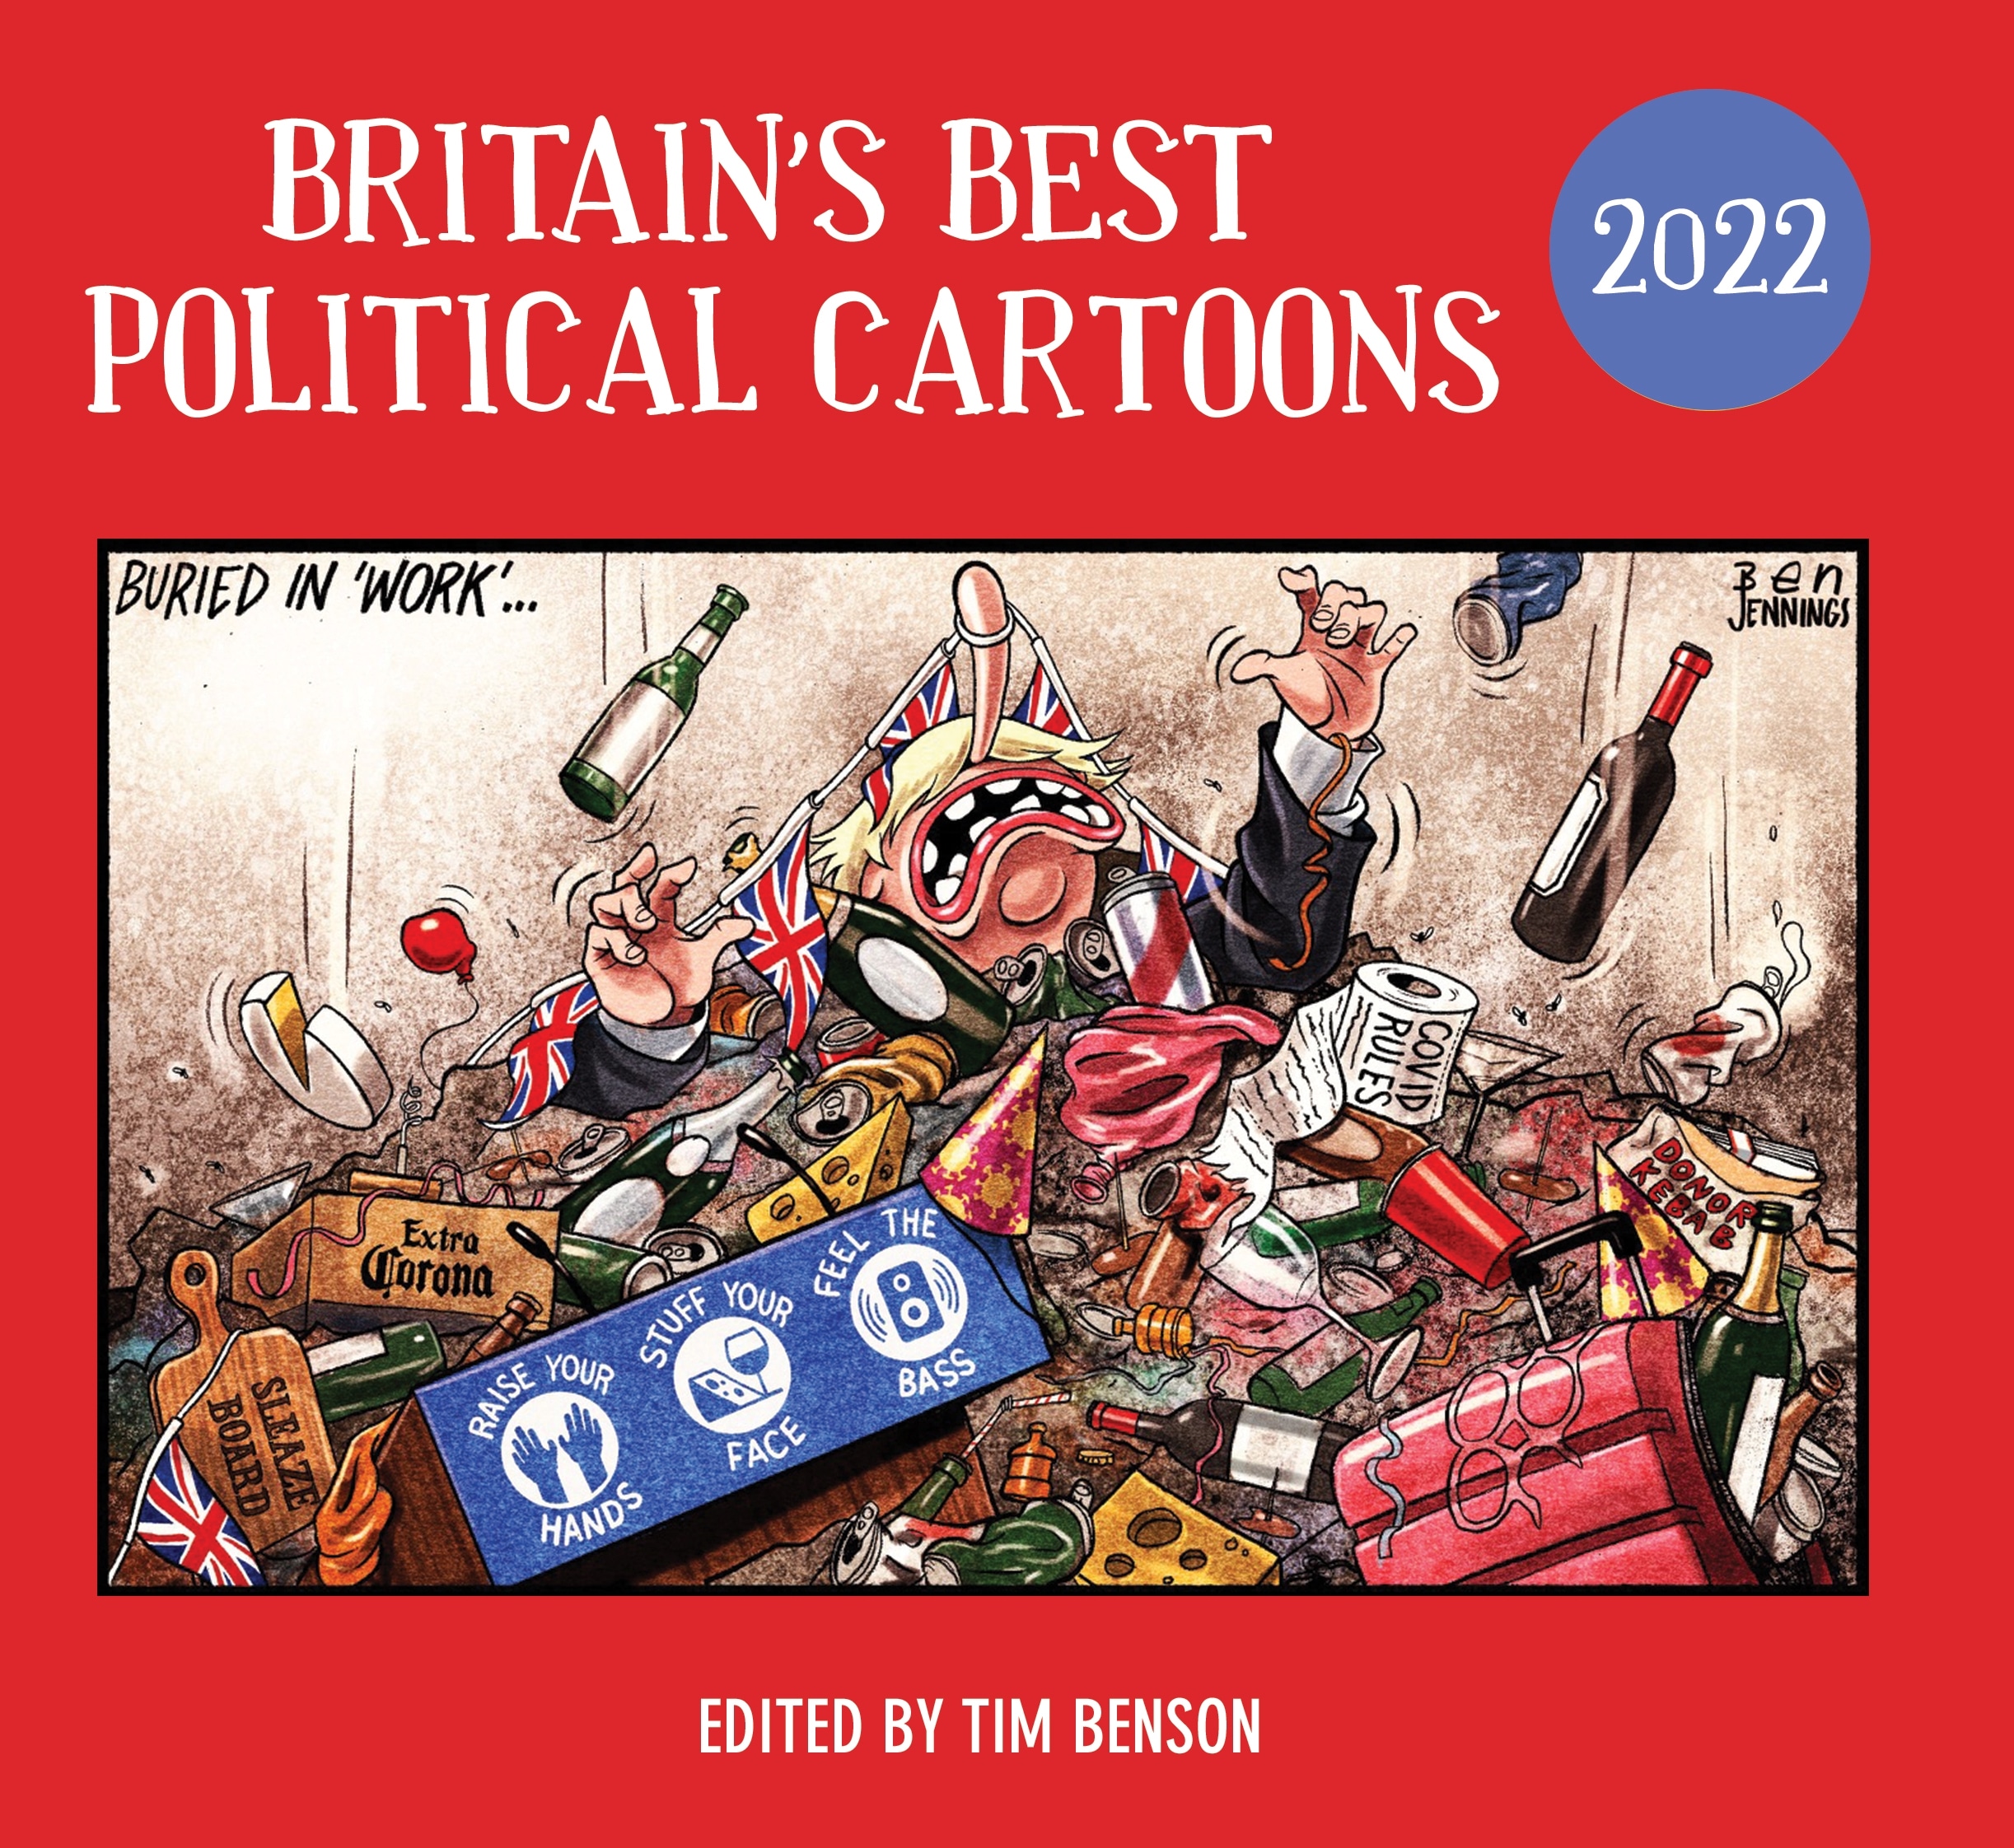 Book “Britain's Best Political Cartoons 2022” by Tim Benson — October 27, 2022